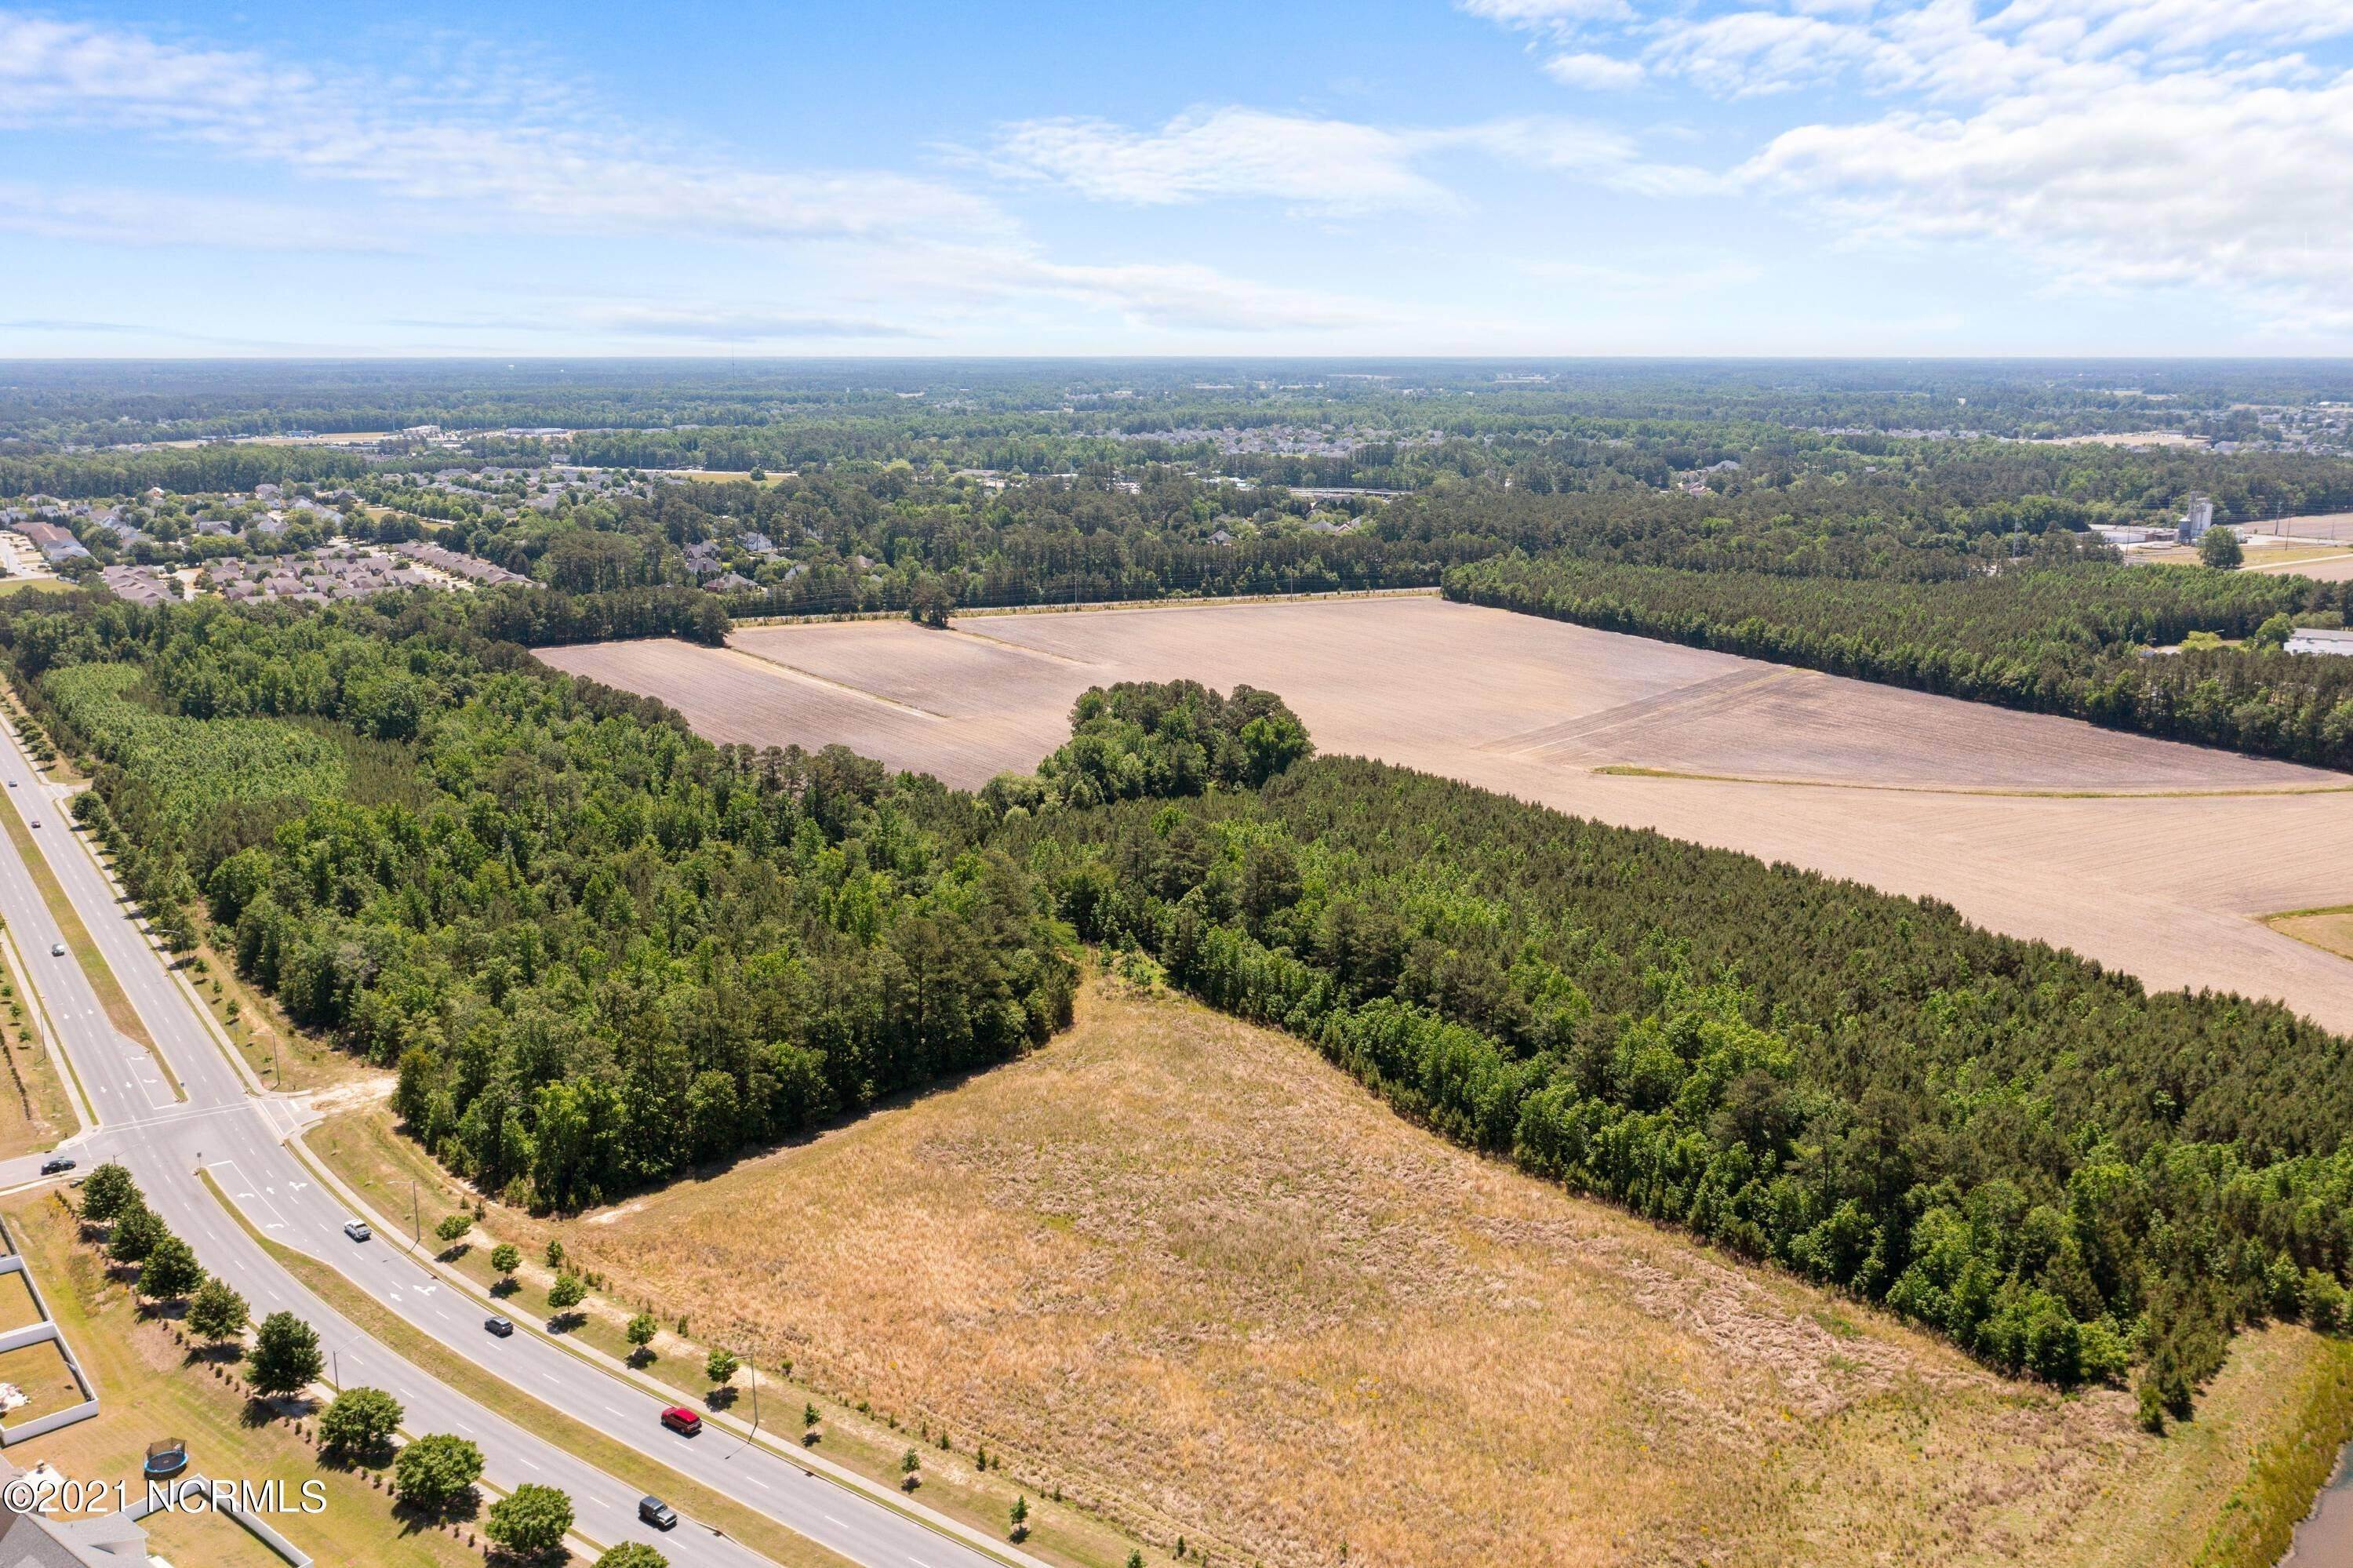 5. Land for Sale at Regency Boulevard Greenville, North Carolina 27834 United States